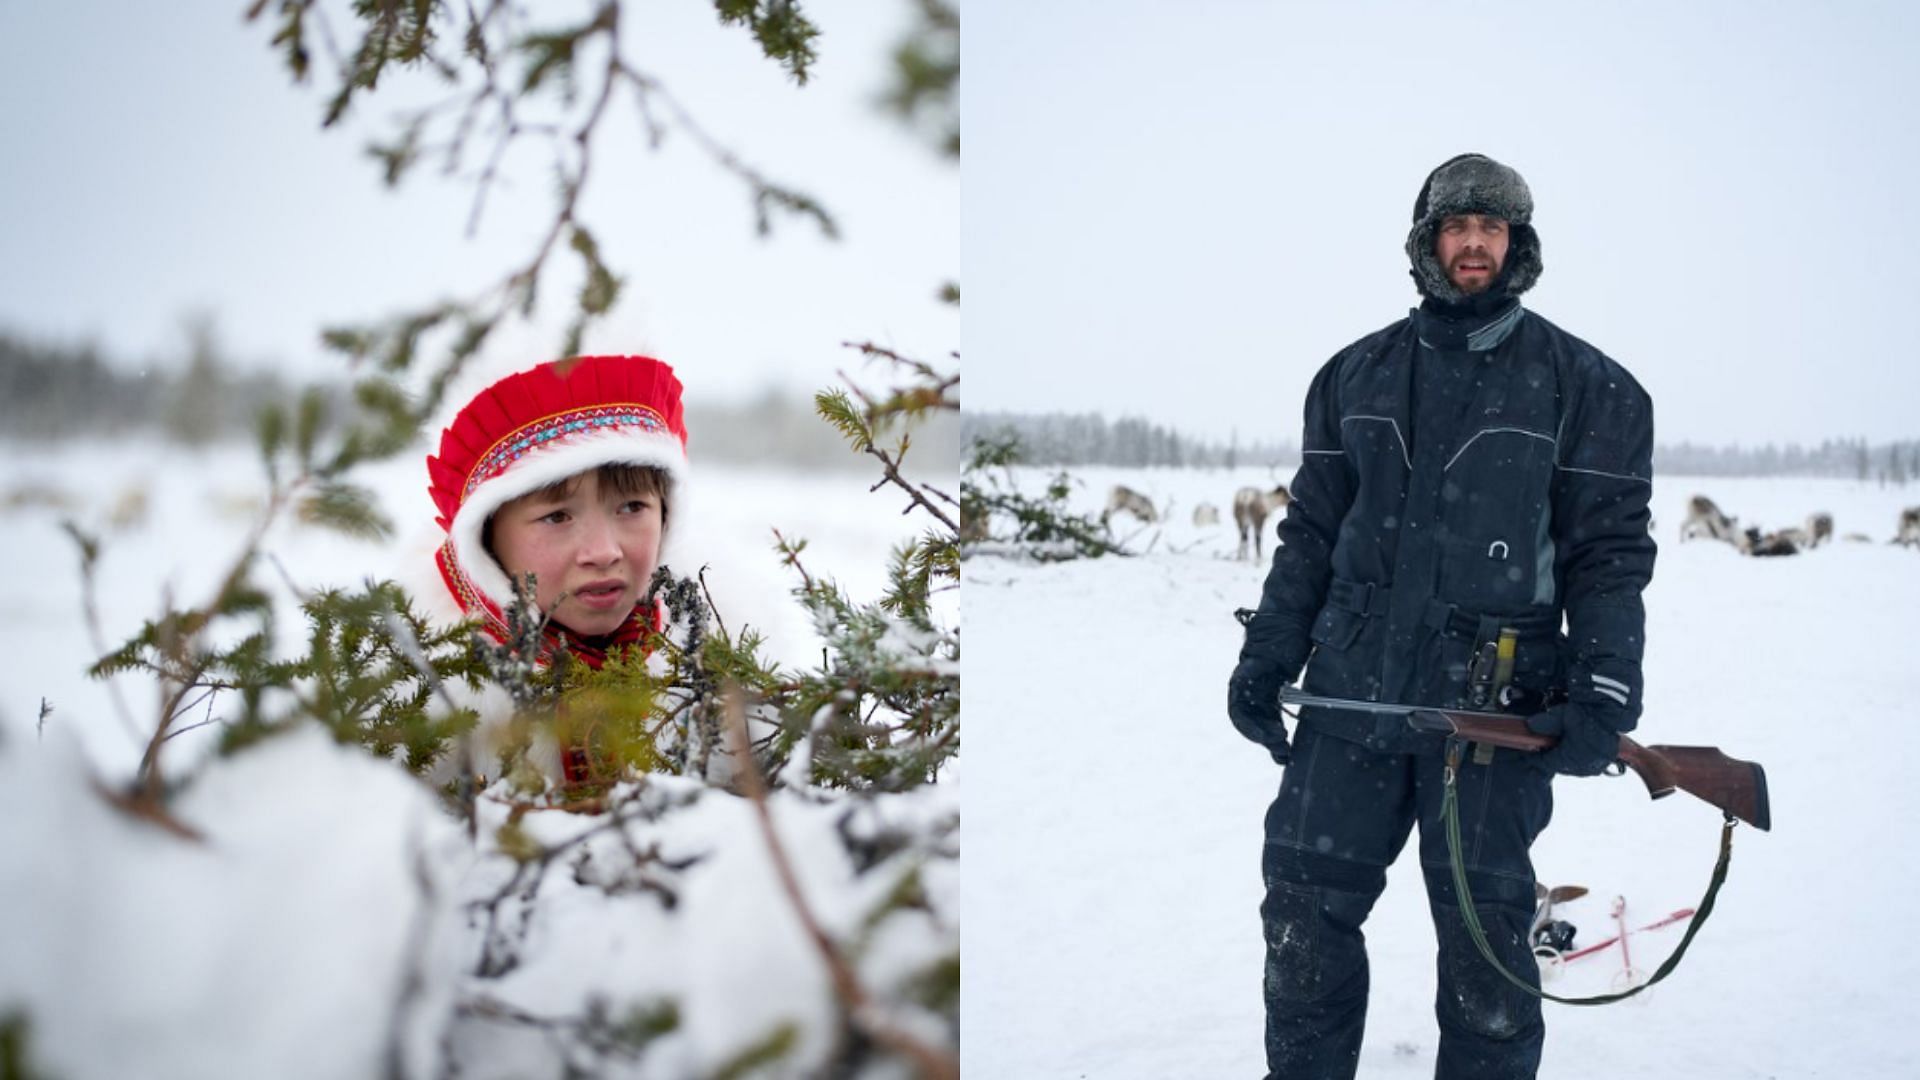 Snow-covered locations and reindeer&#039;s natural habitat were filmed (Image via Netflix Tudum and Instagram@Netflixnordic)